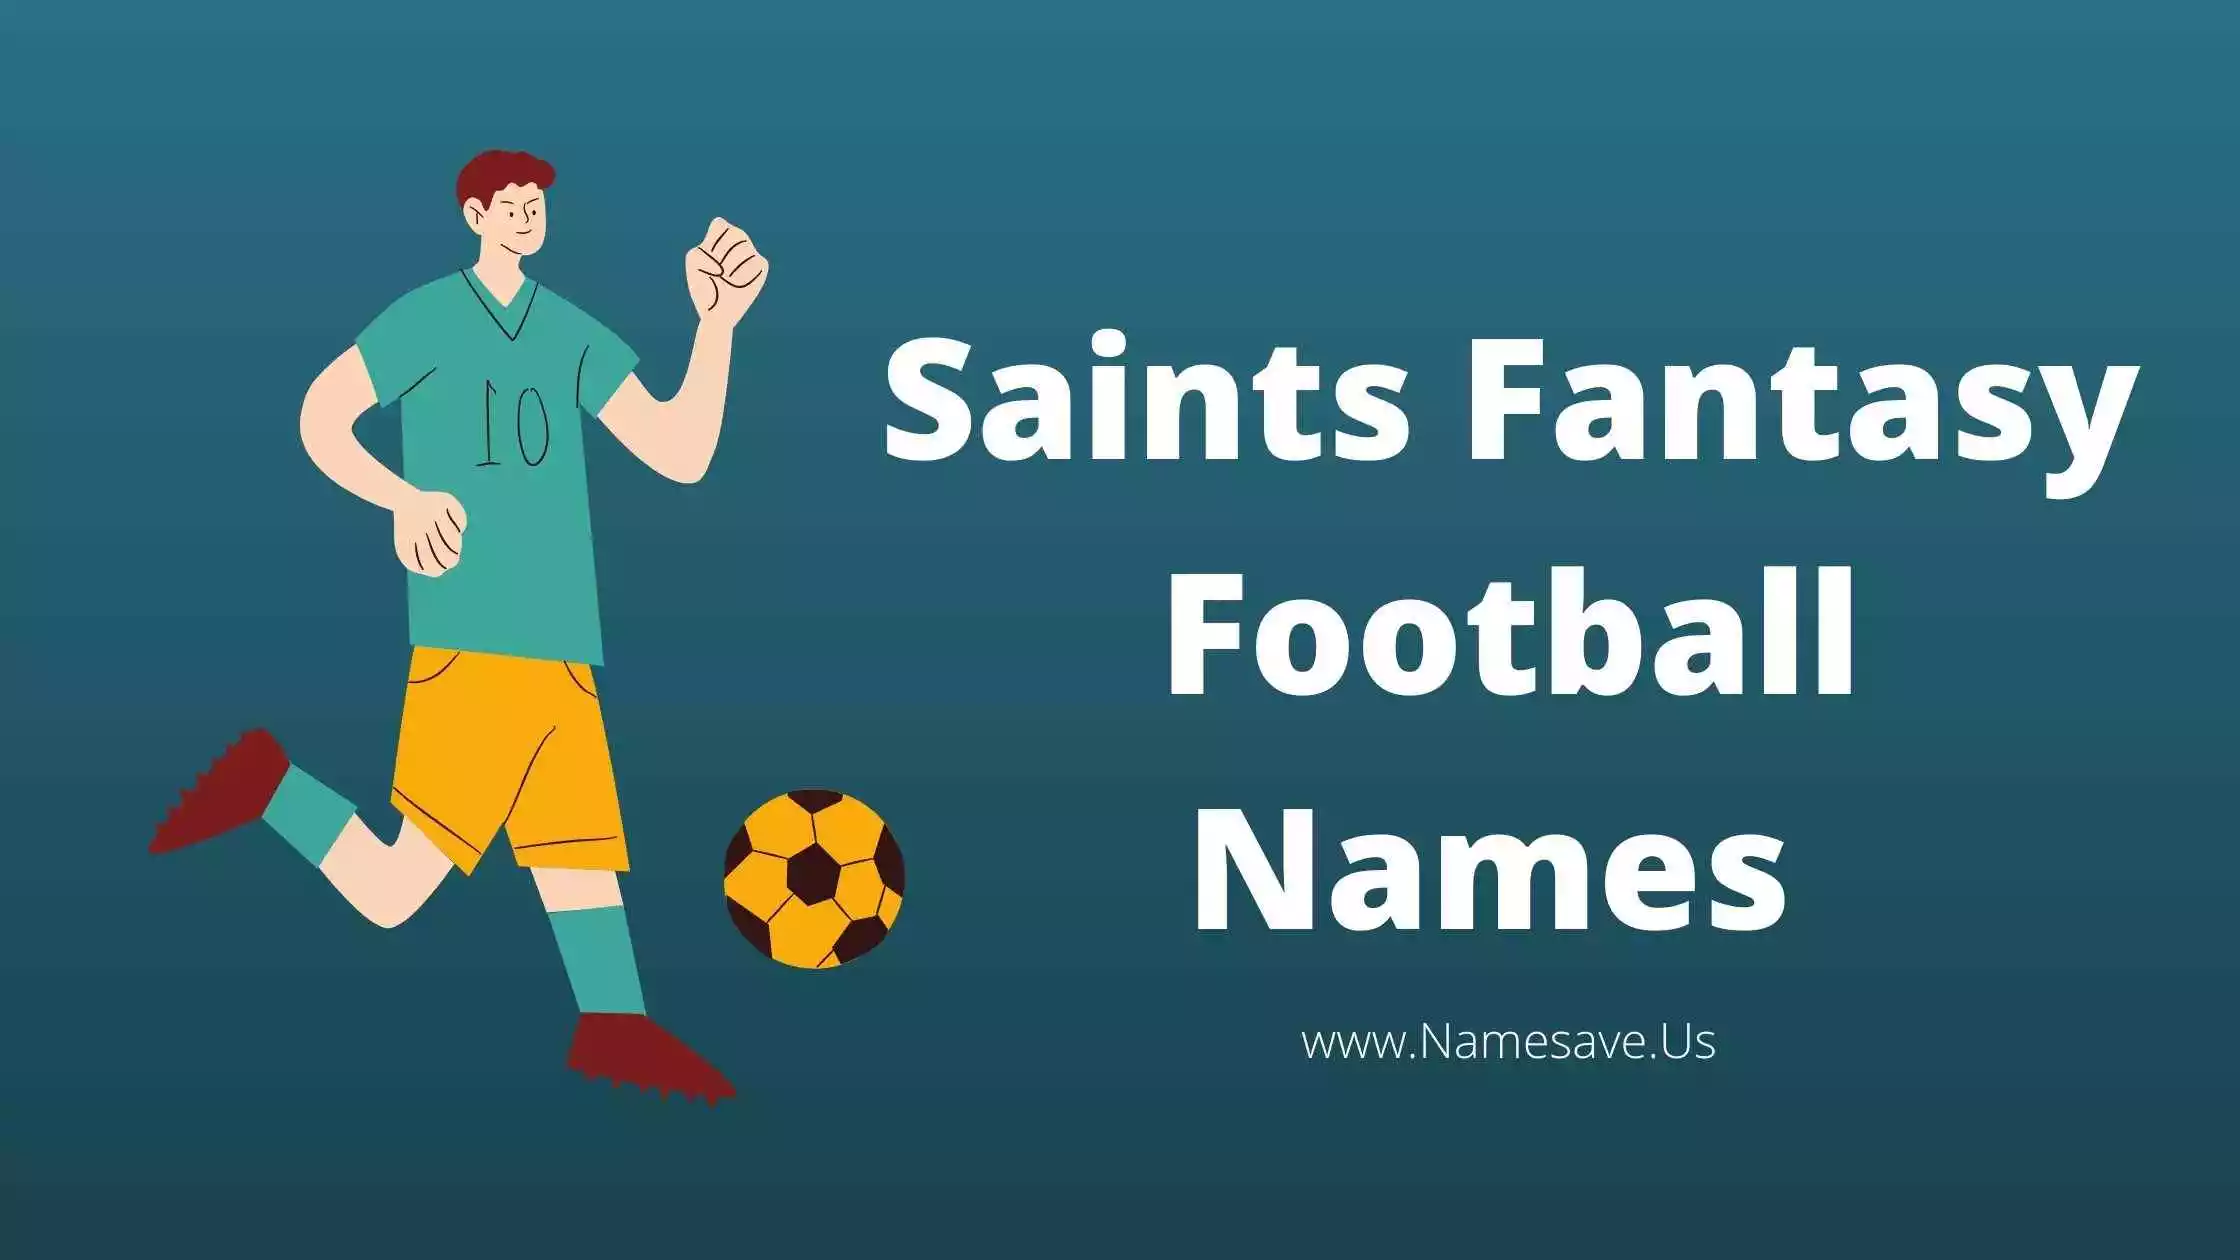 Saints Fantasy Football Names